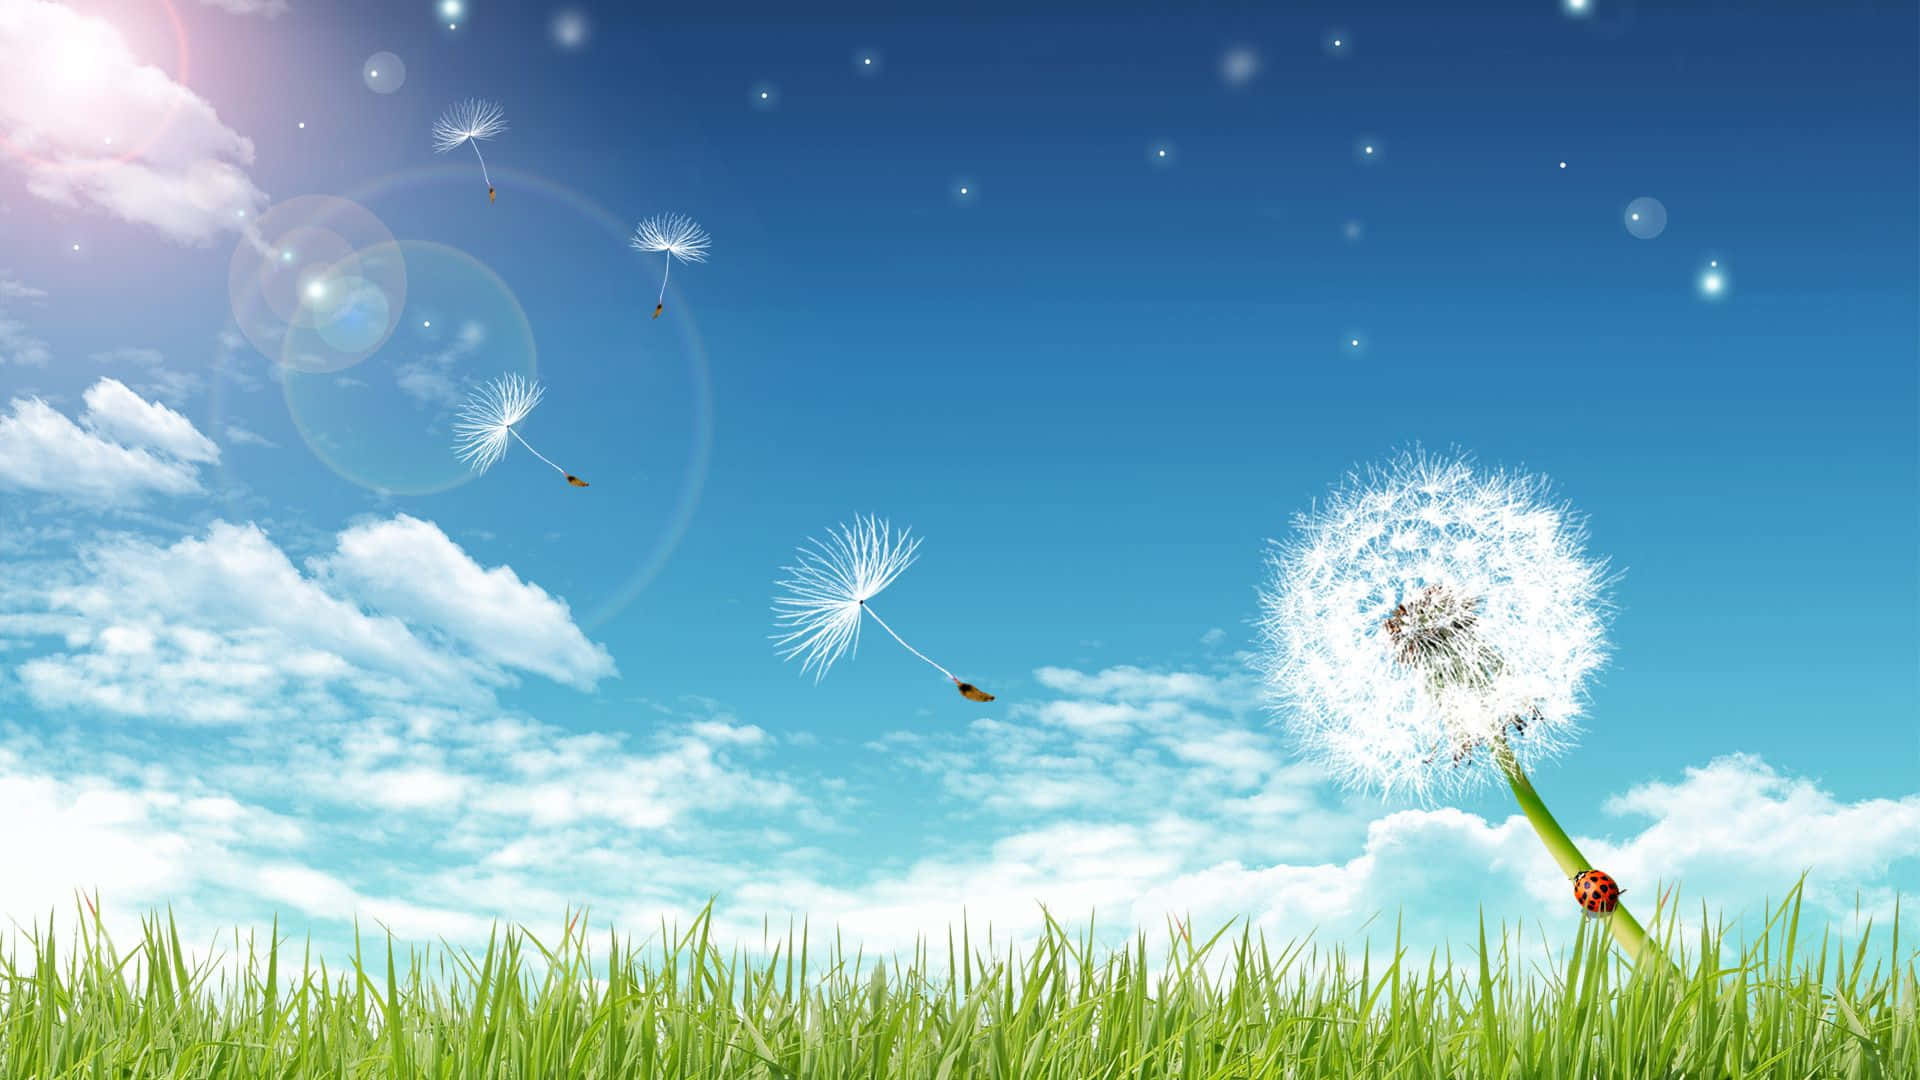 A Dandelion Blowing In The Wind In The Sky